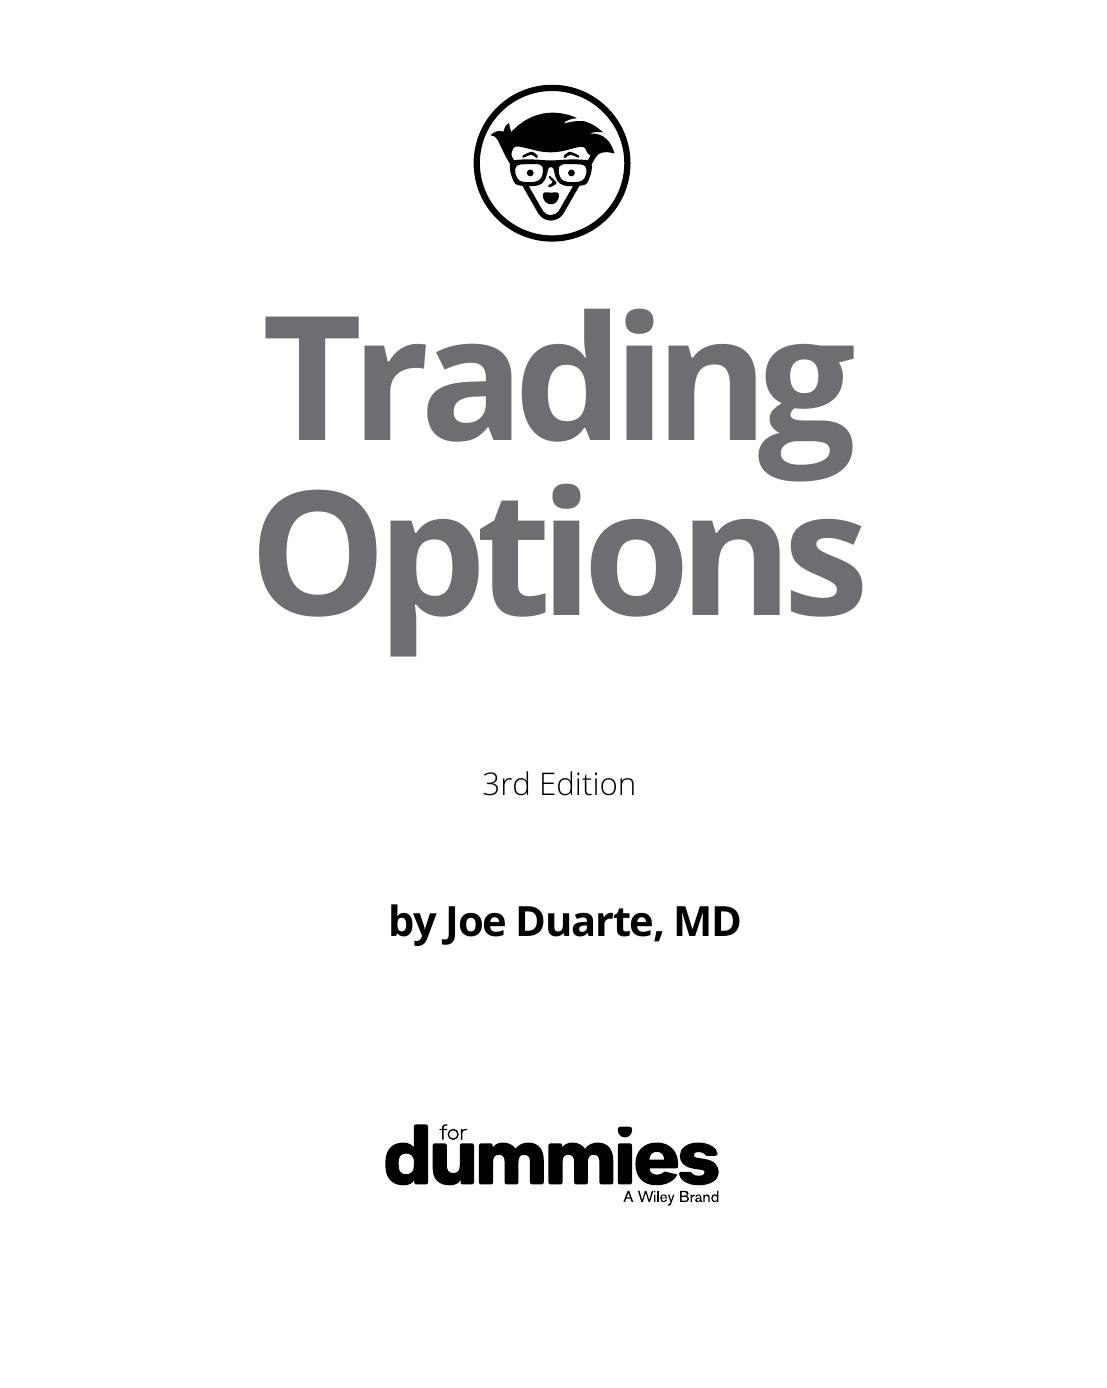 Trading Options for Dummies by Joe Duarte